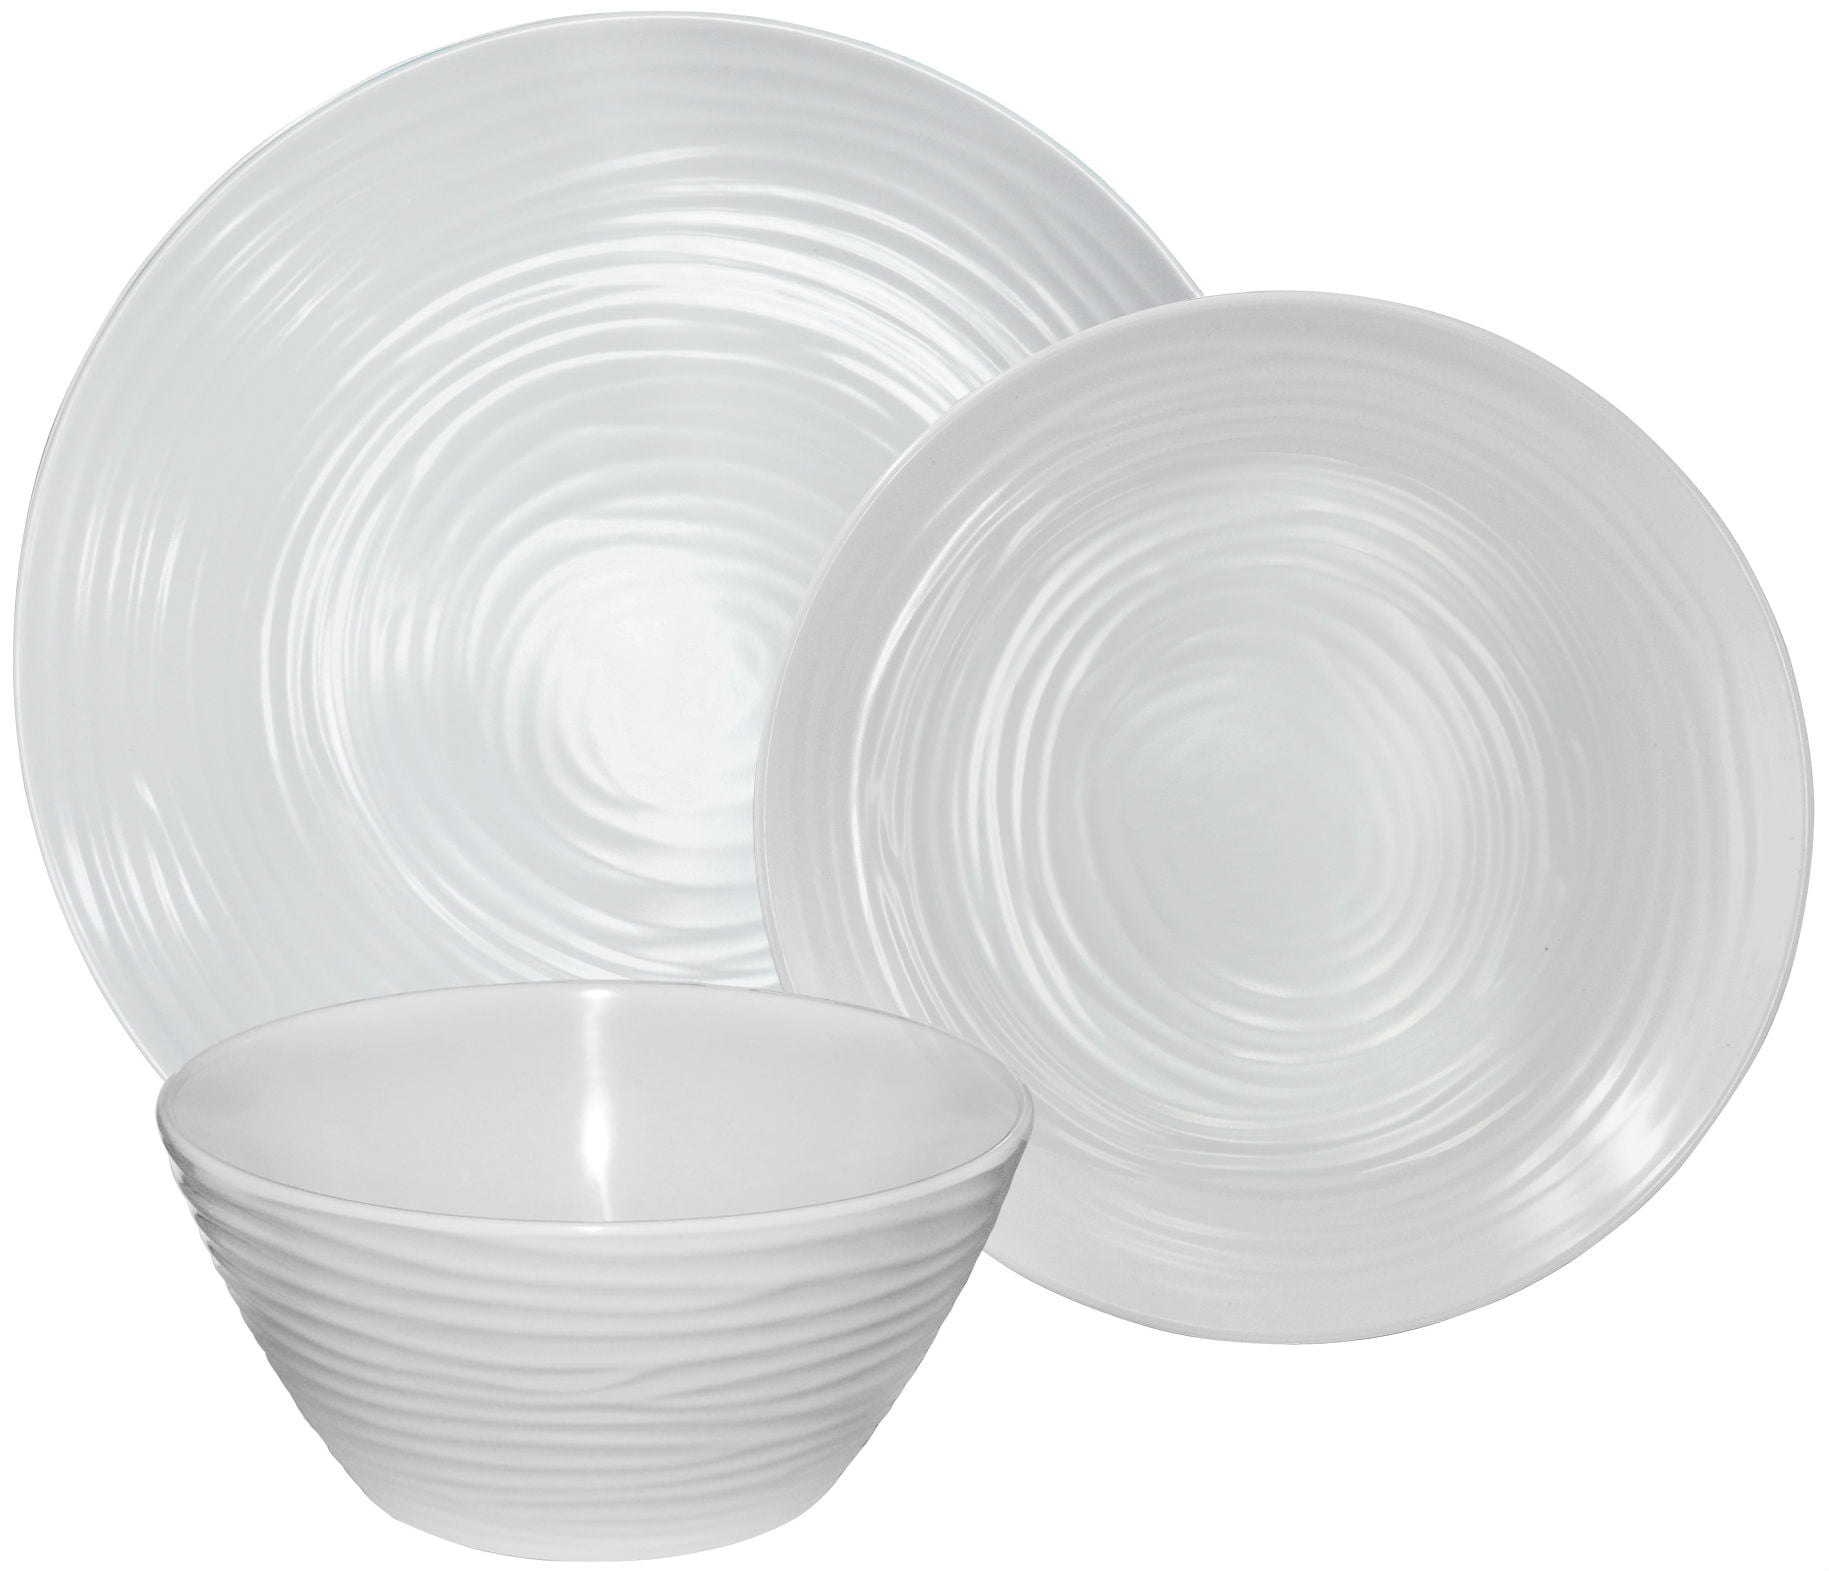 Amhomel 12-Piece White Porcelain Dinner Plate Set